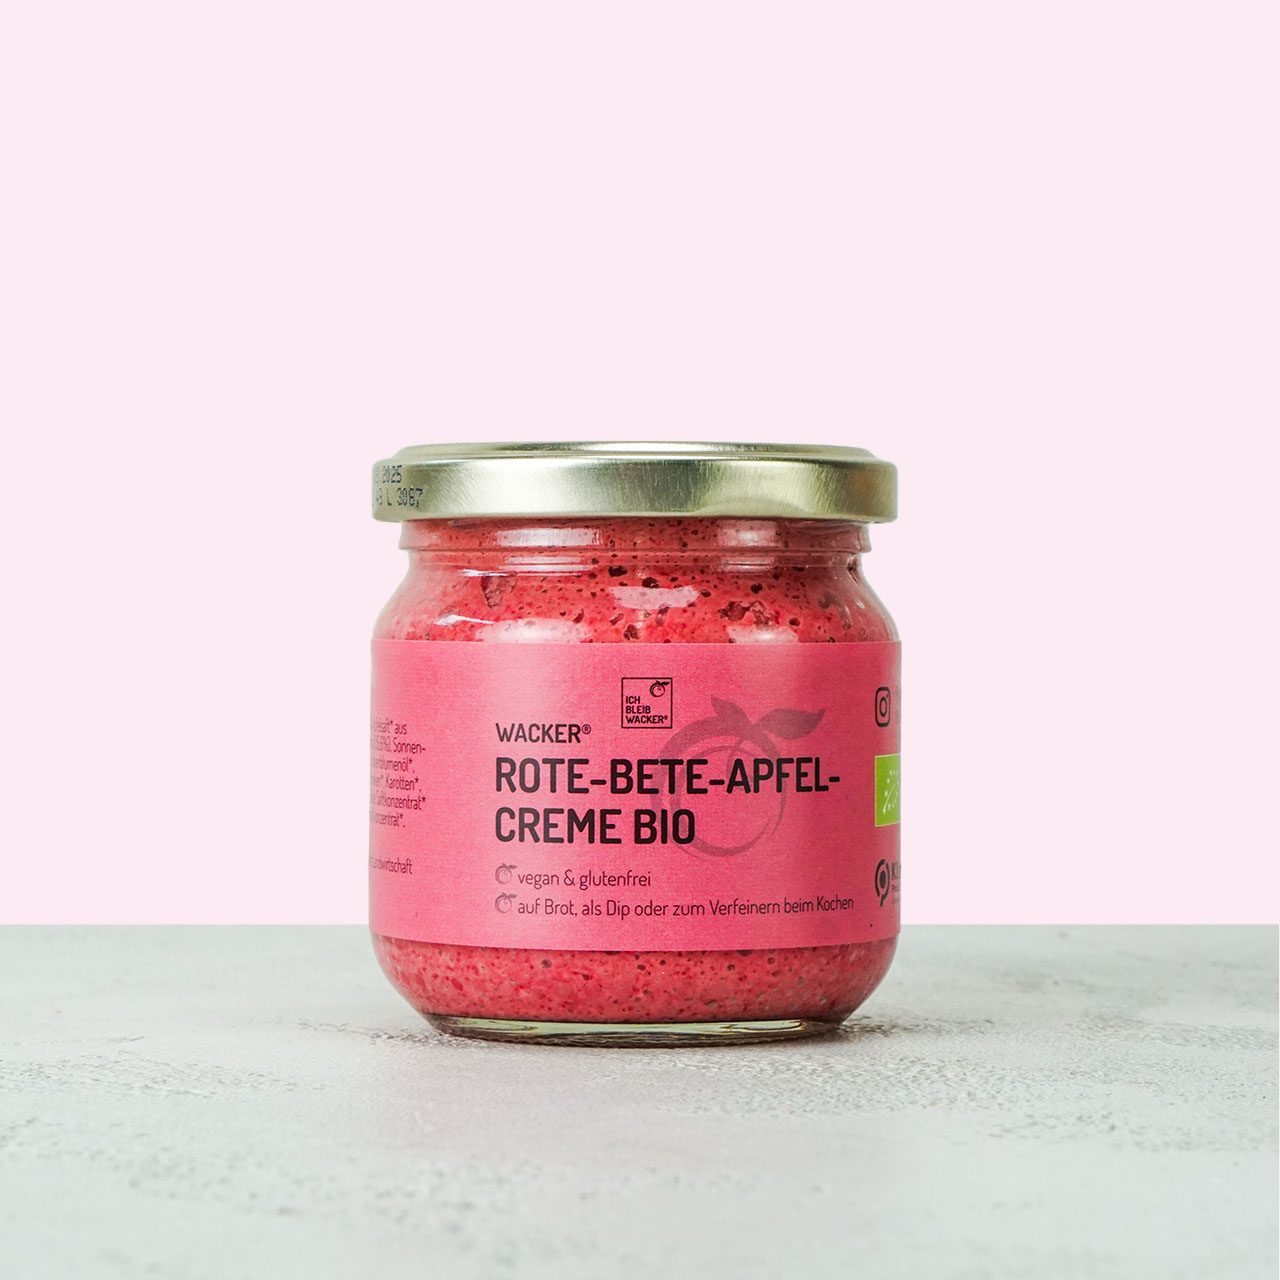 Wacker Rote-Bete-Apfel-Creme Bio